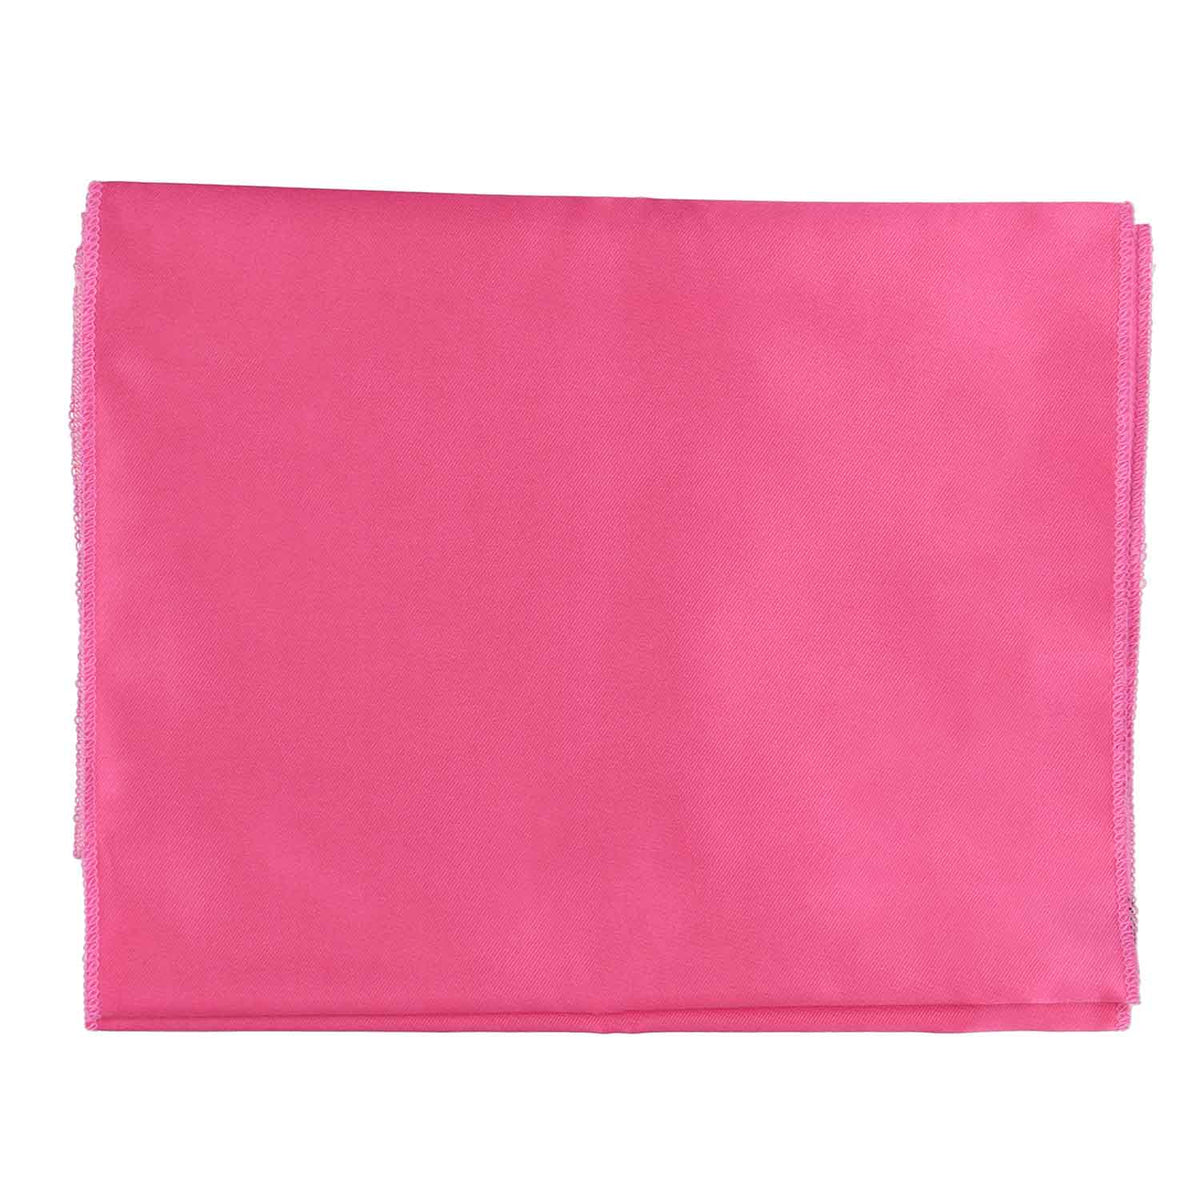 Hot Pink Solid Color Scarf | Shop at TieMart – TieMart, Inc.